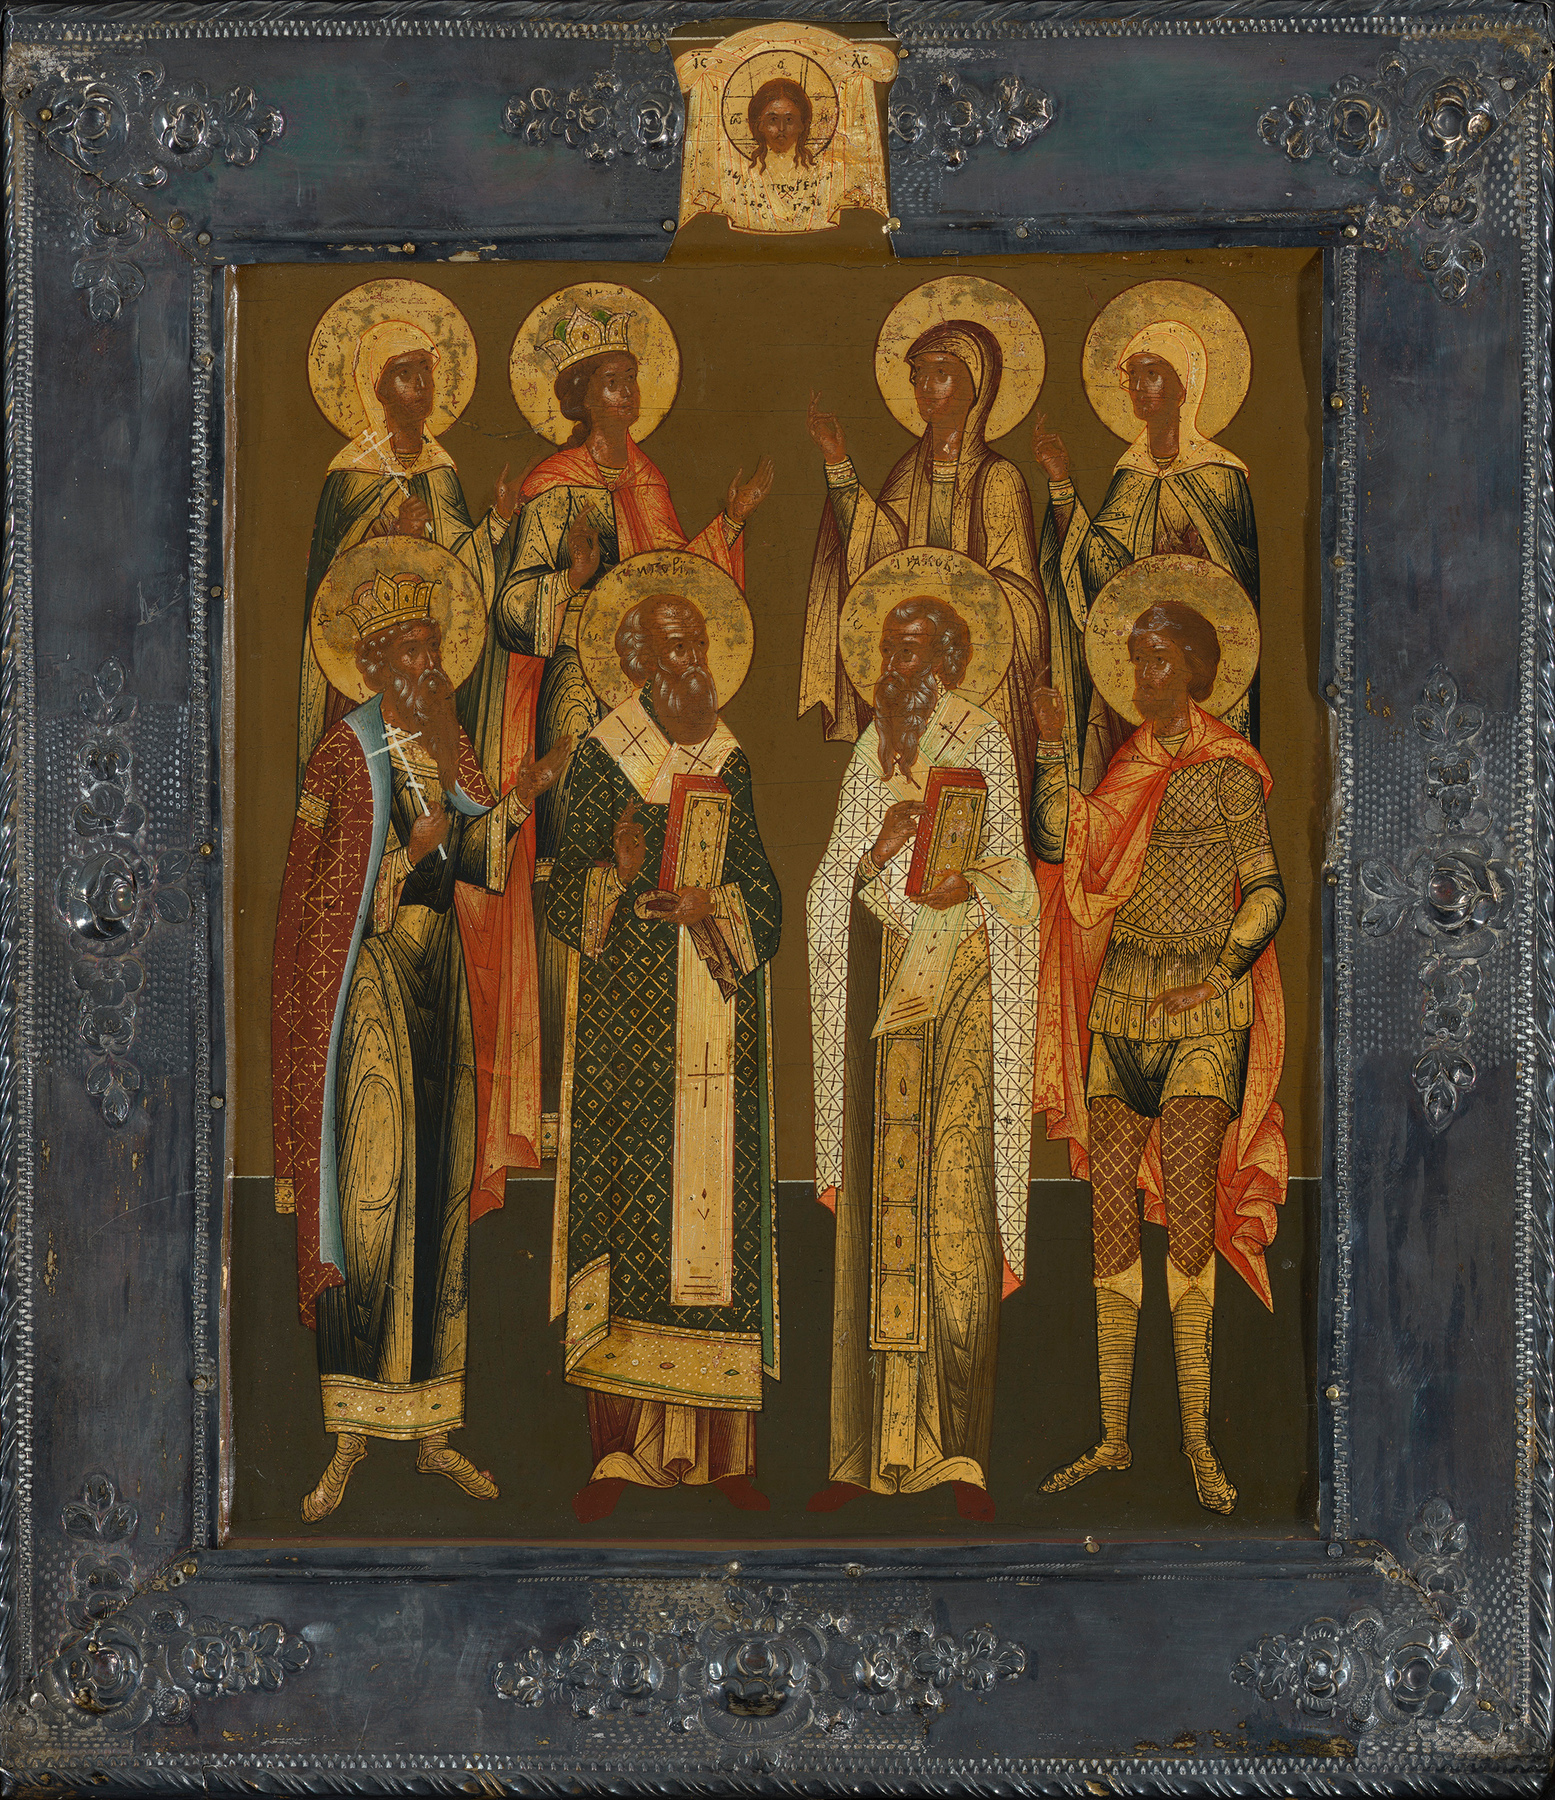 The Eight Chosen Saints